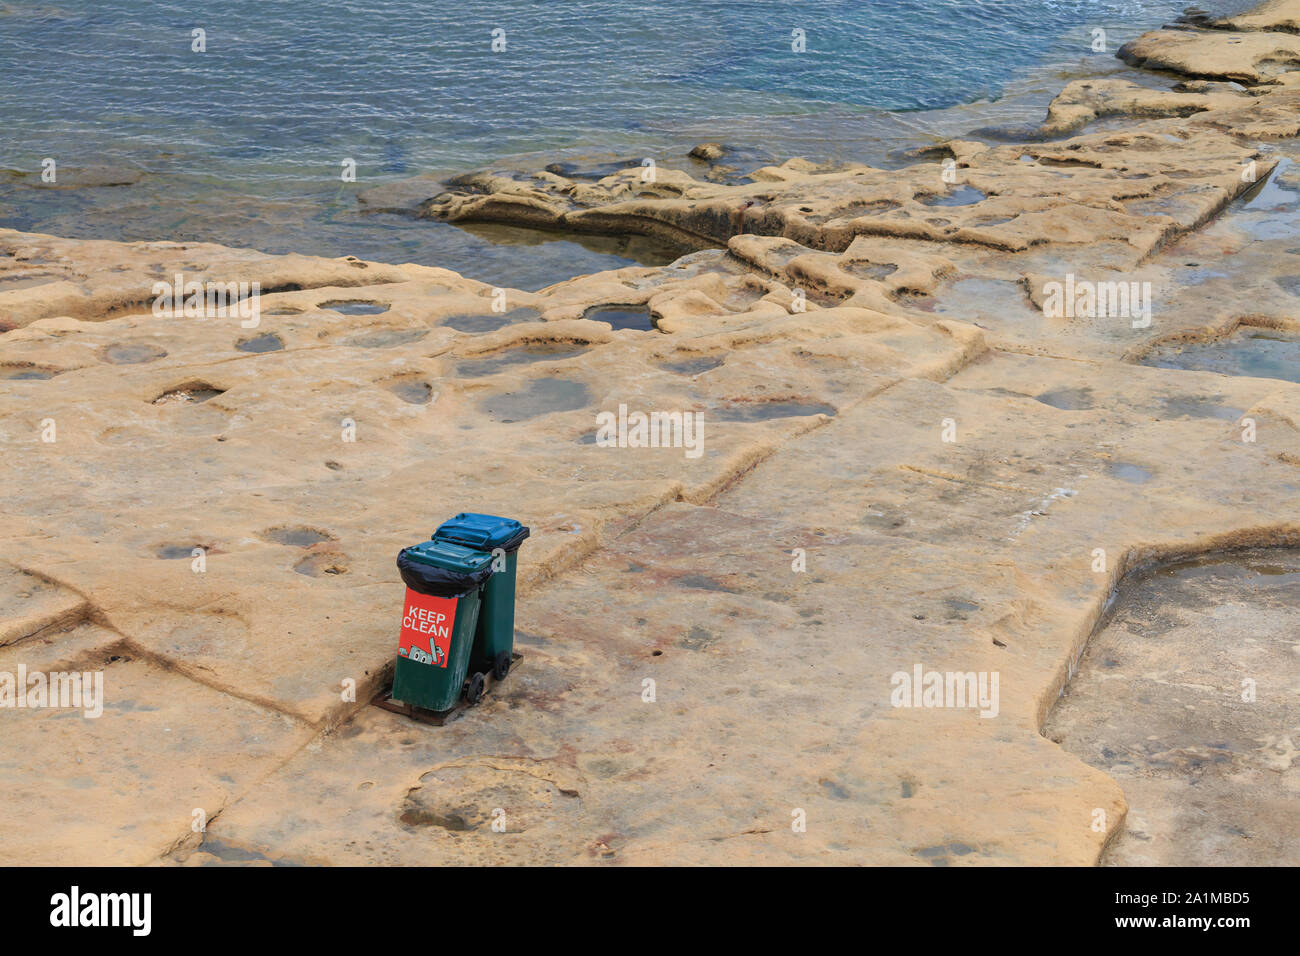 Two trash bins in public Malta beach city Sliema Stock Photo